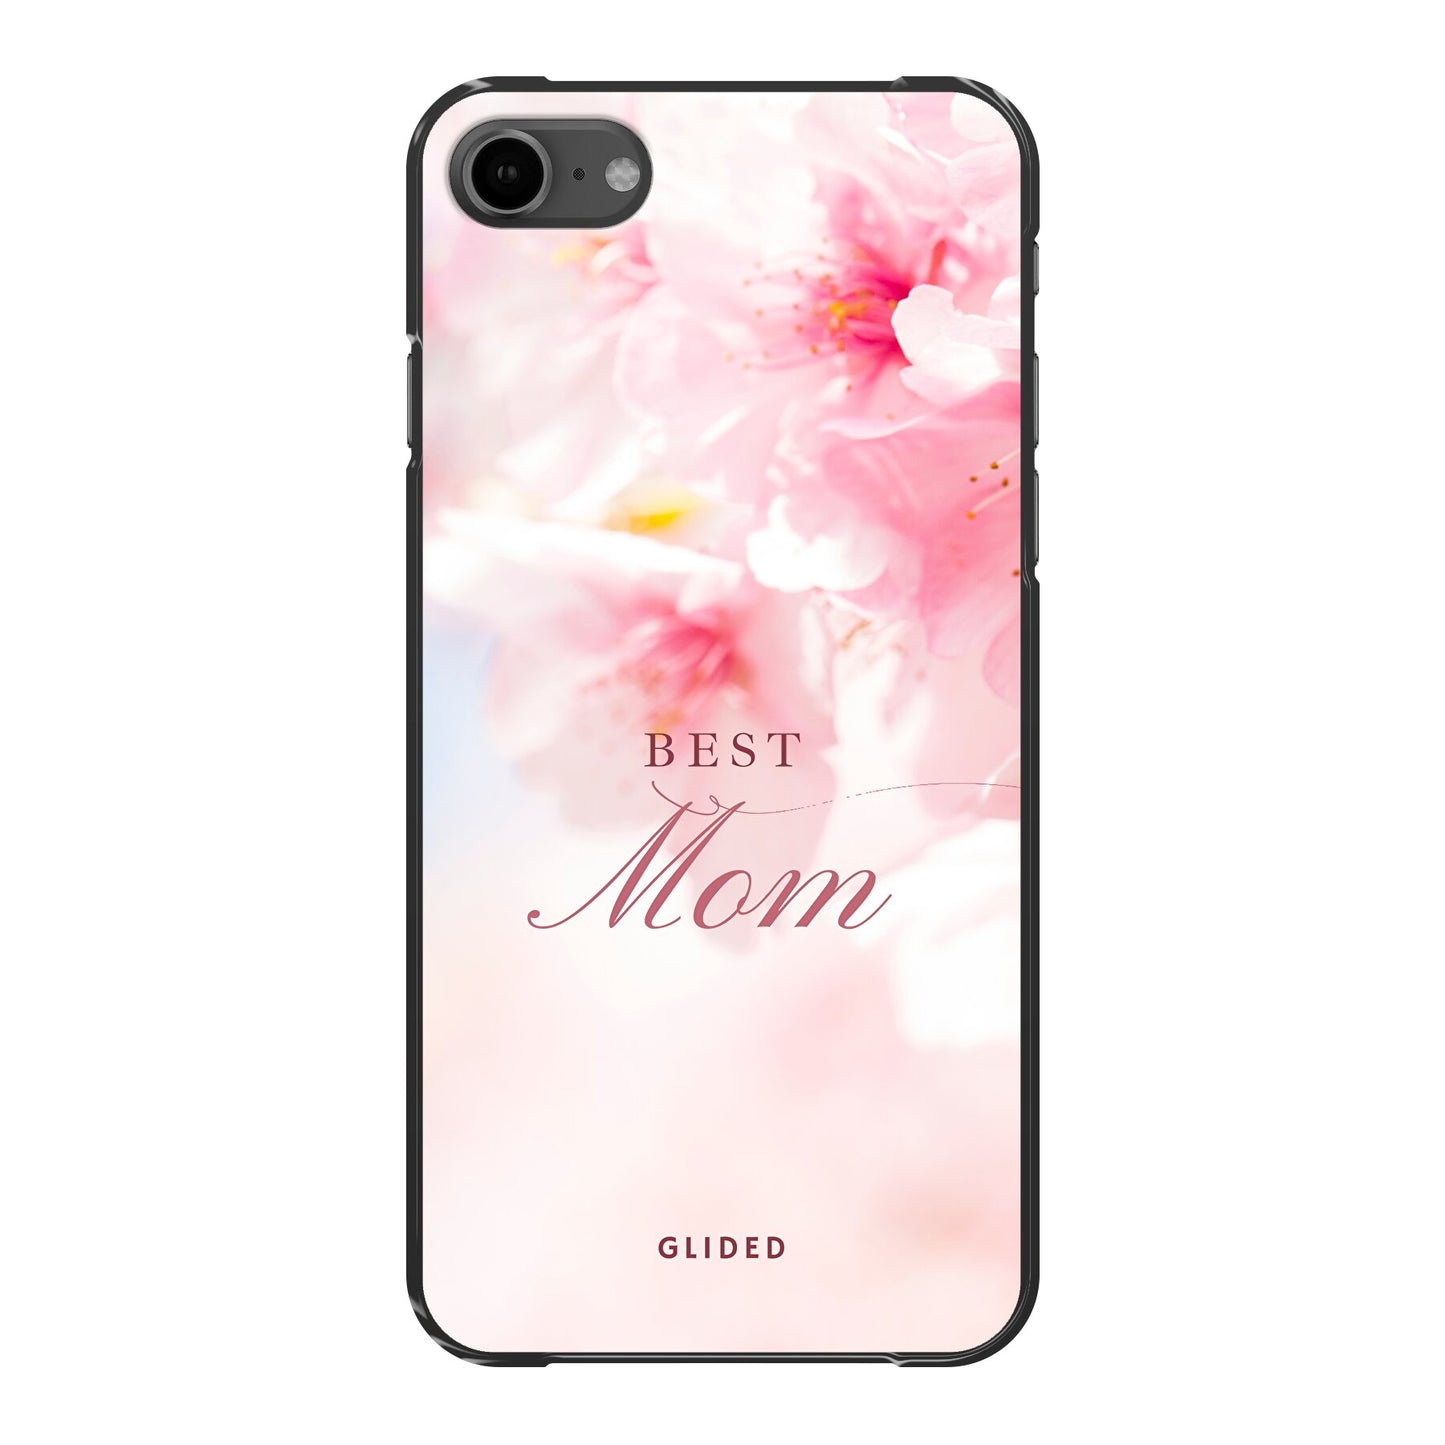 Flower Power - iPhone 7 - Hard Case